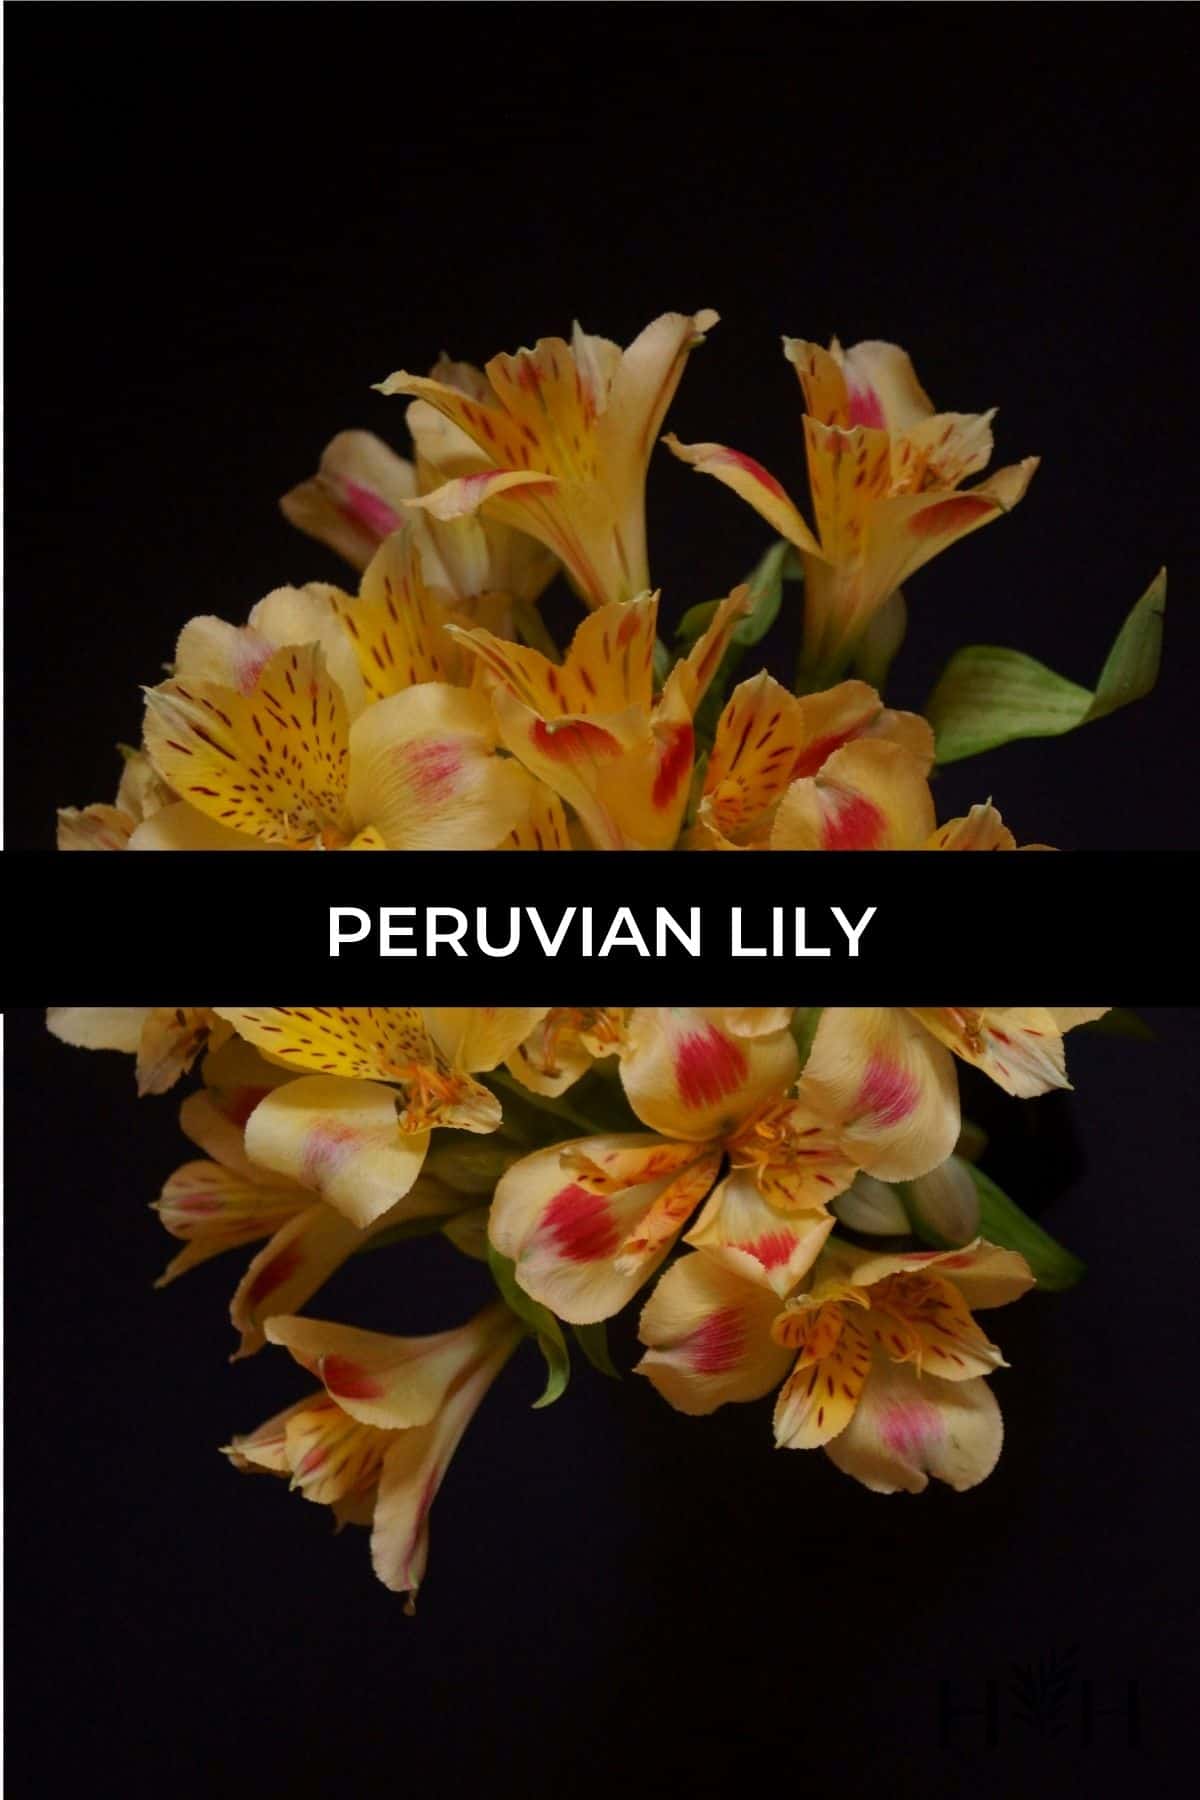 Peruvian lily via @home4theharvest